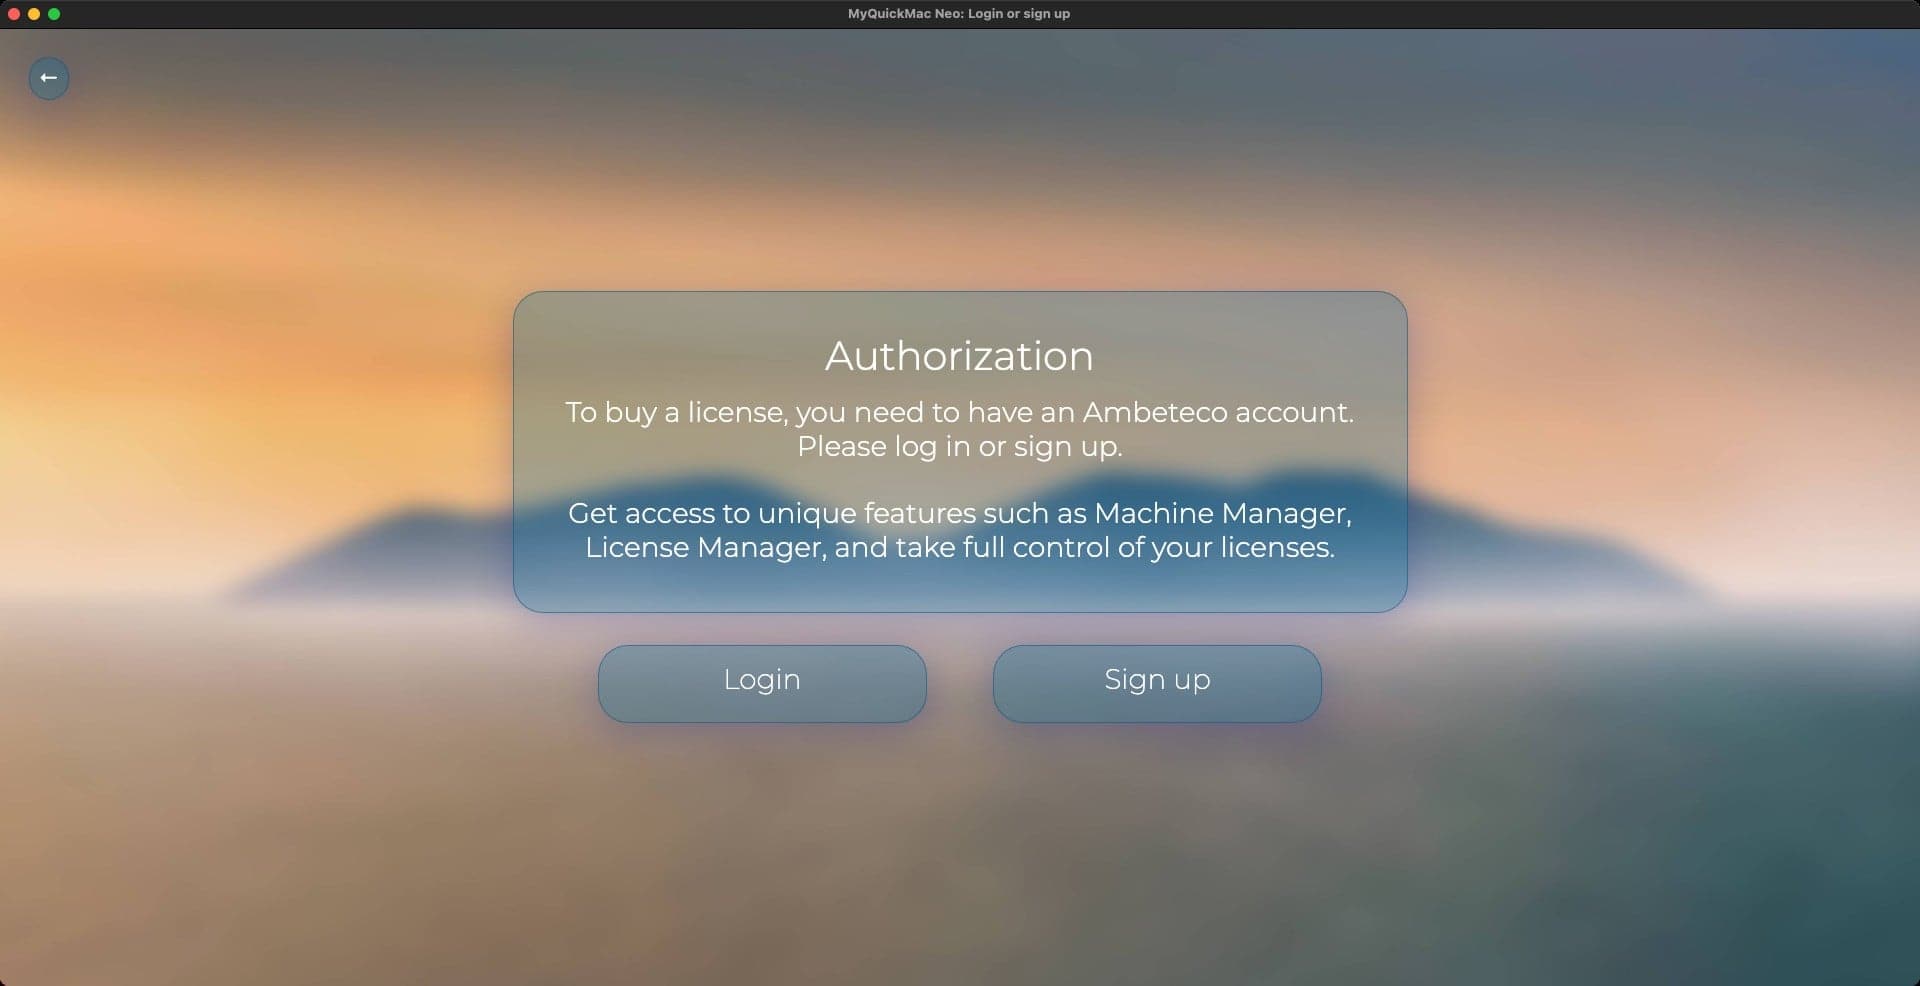 Screenshot of 'Authorization' window of MyQuickMac Neo